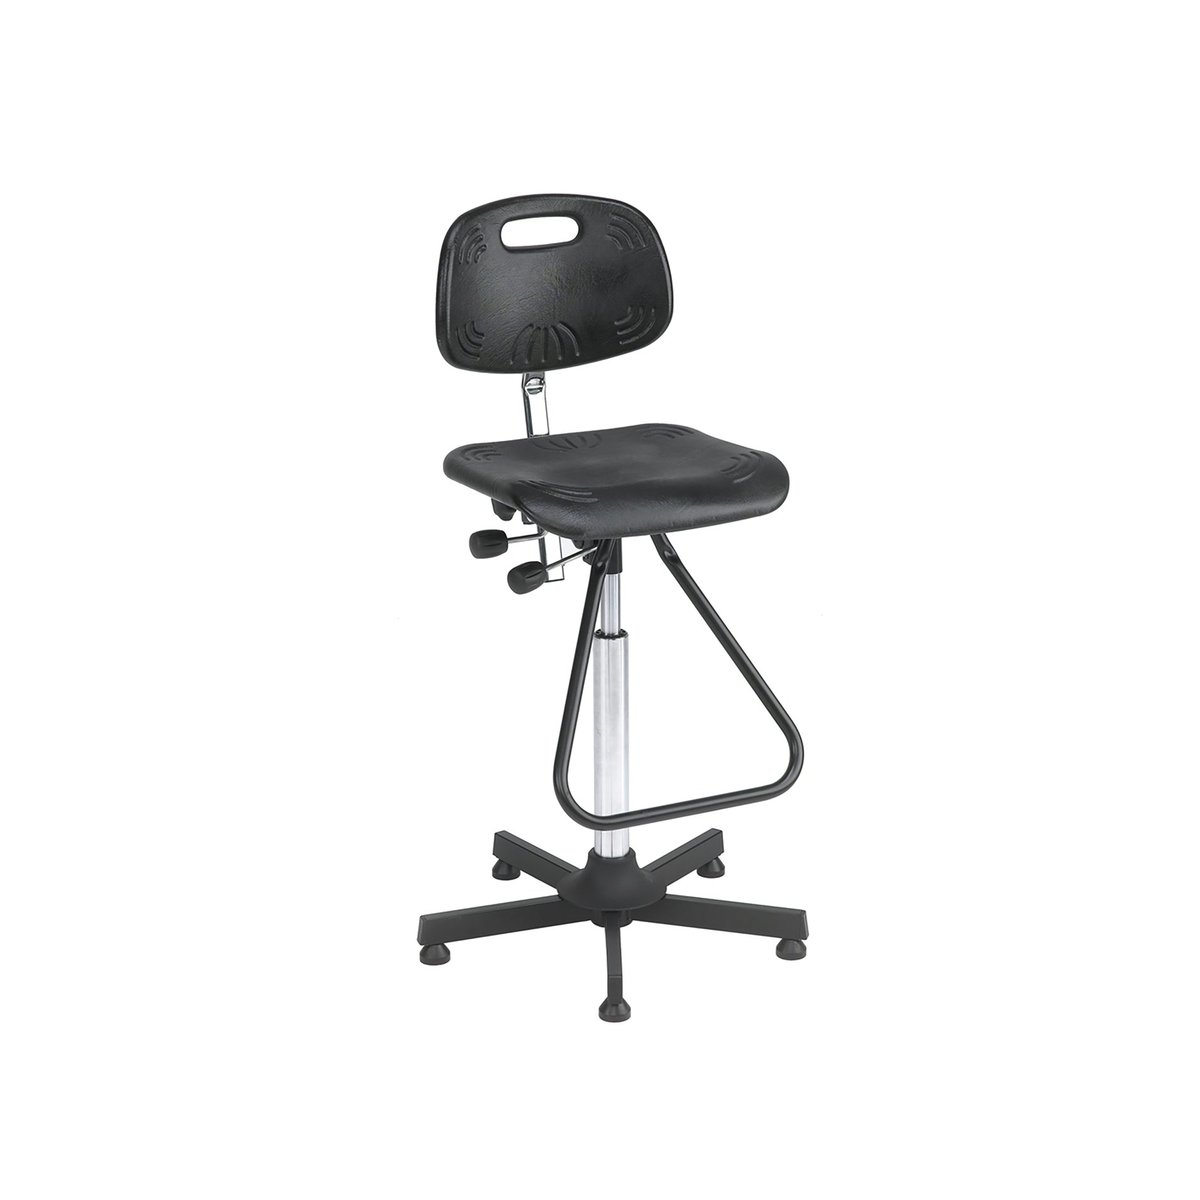 88601007 - Industrial chair